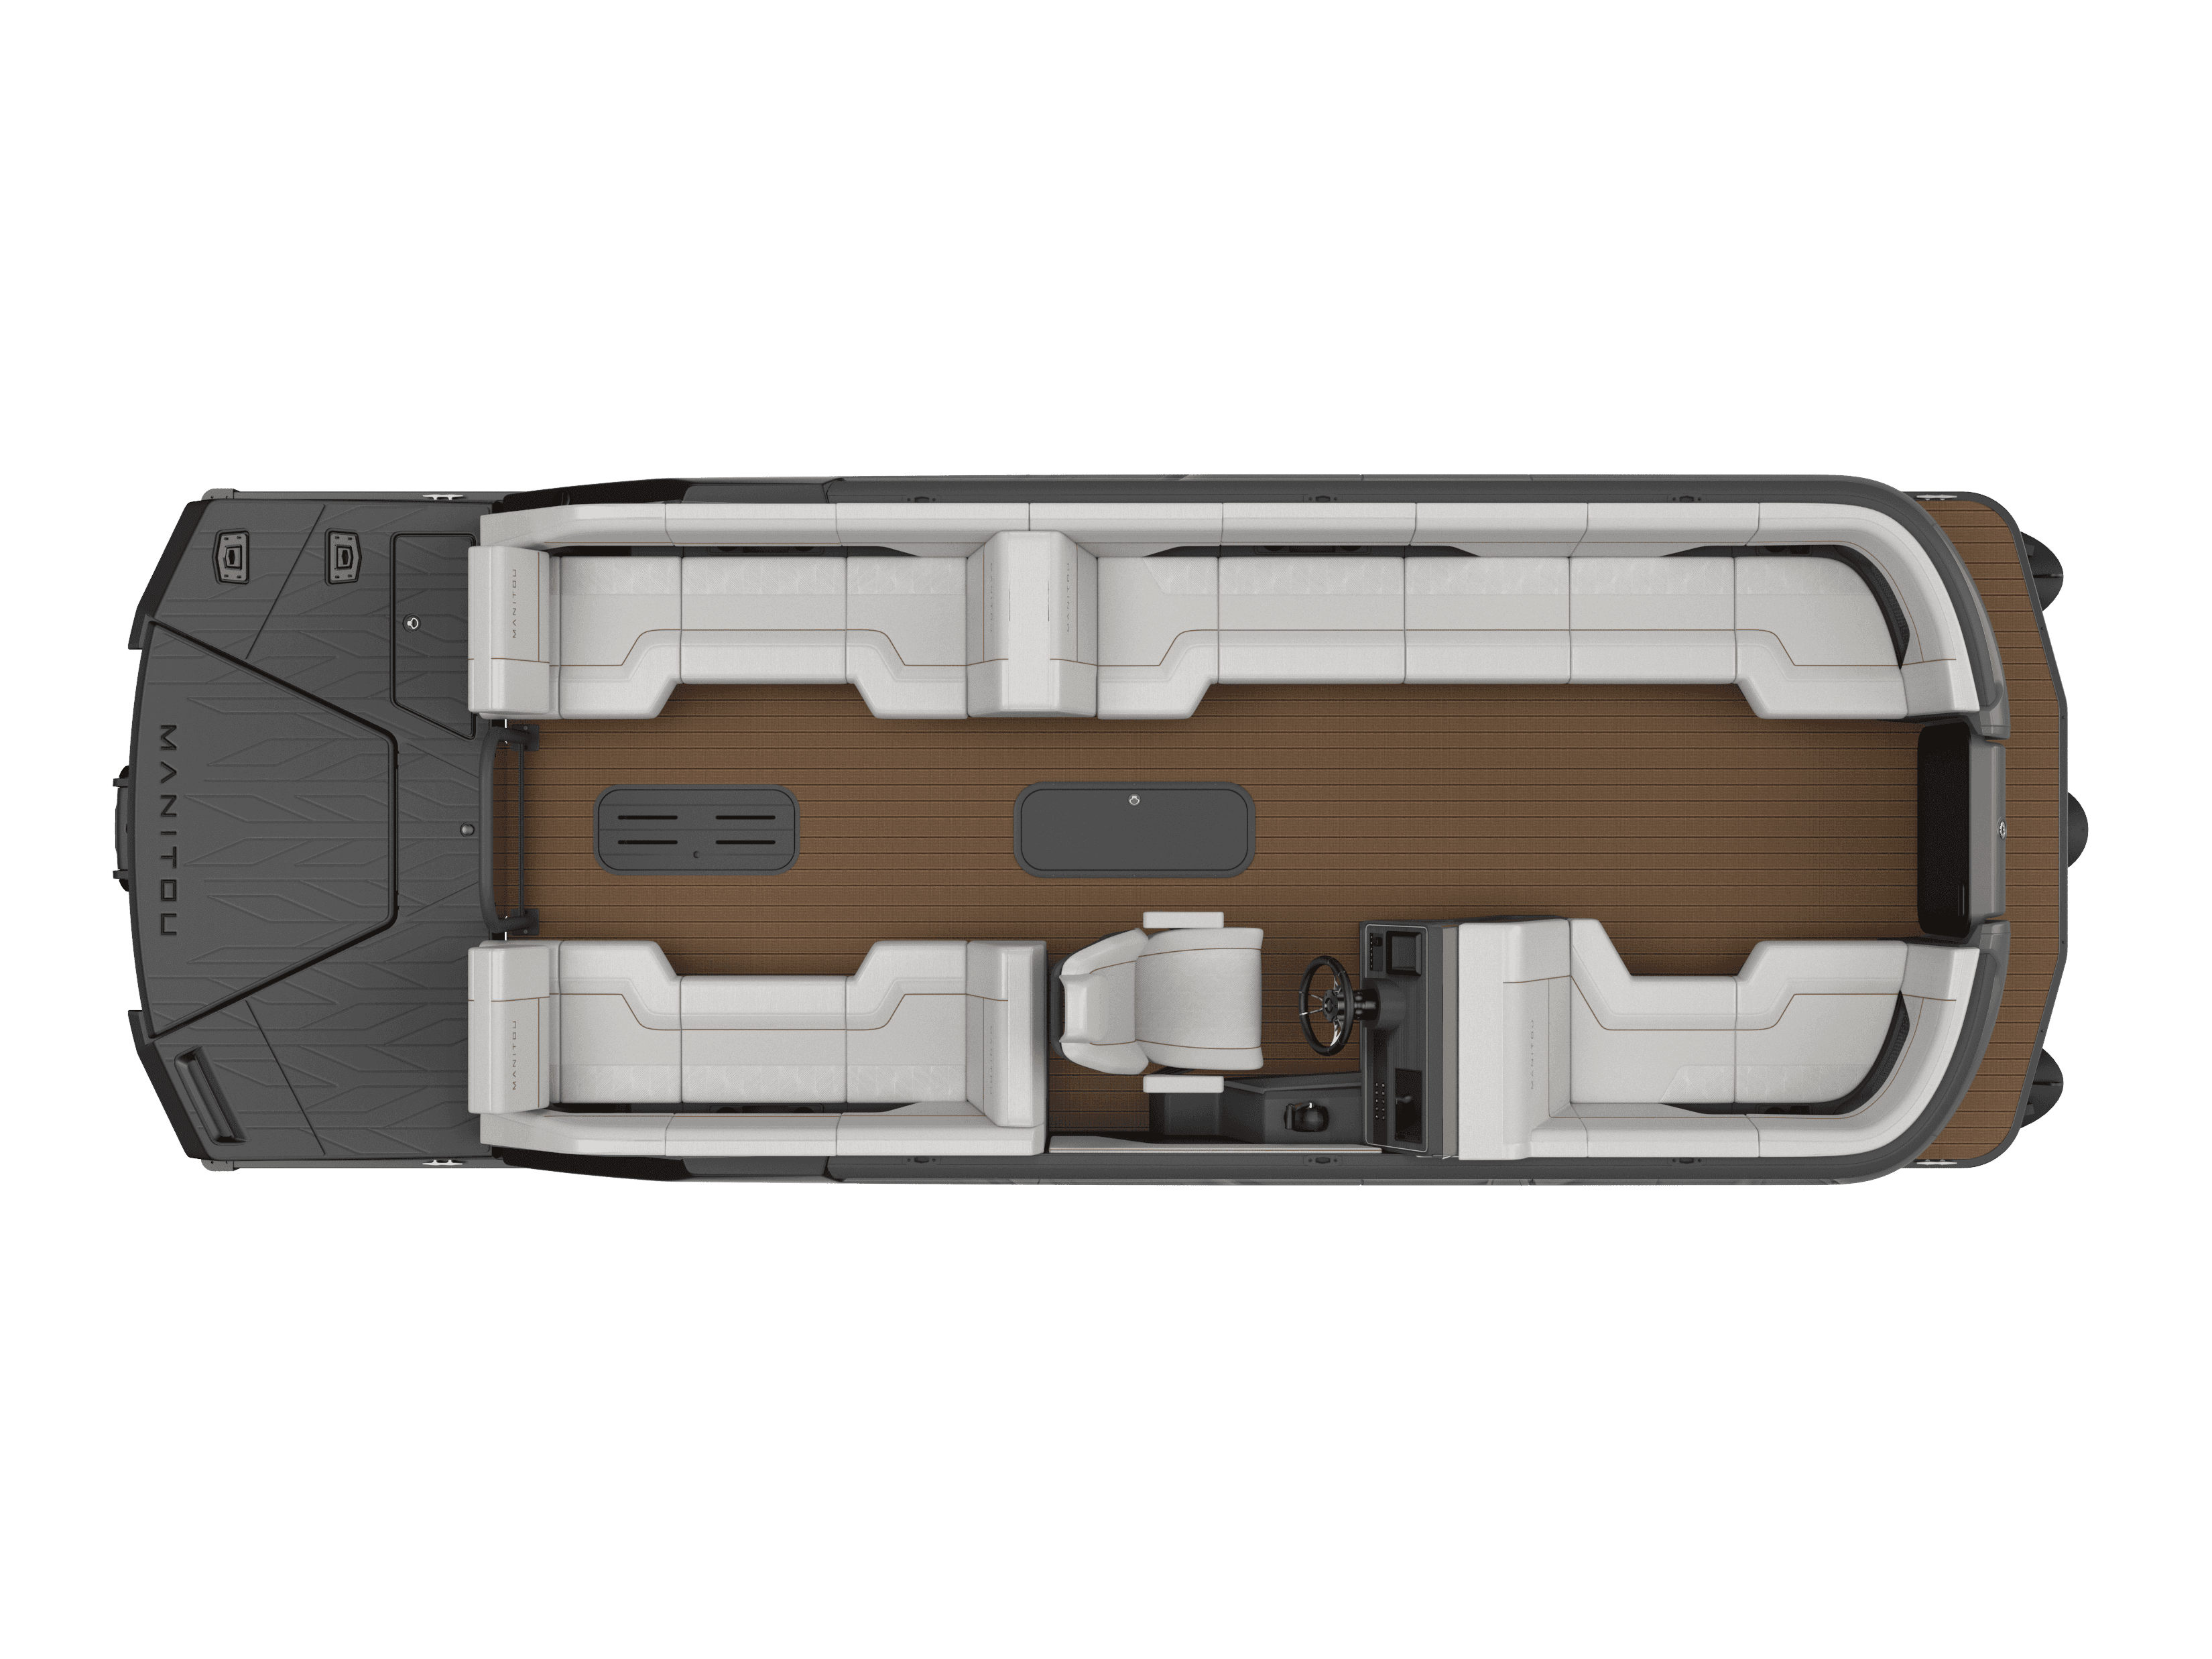 Floorplan of a 2023 Manitou Explore Pontoon boat